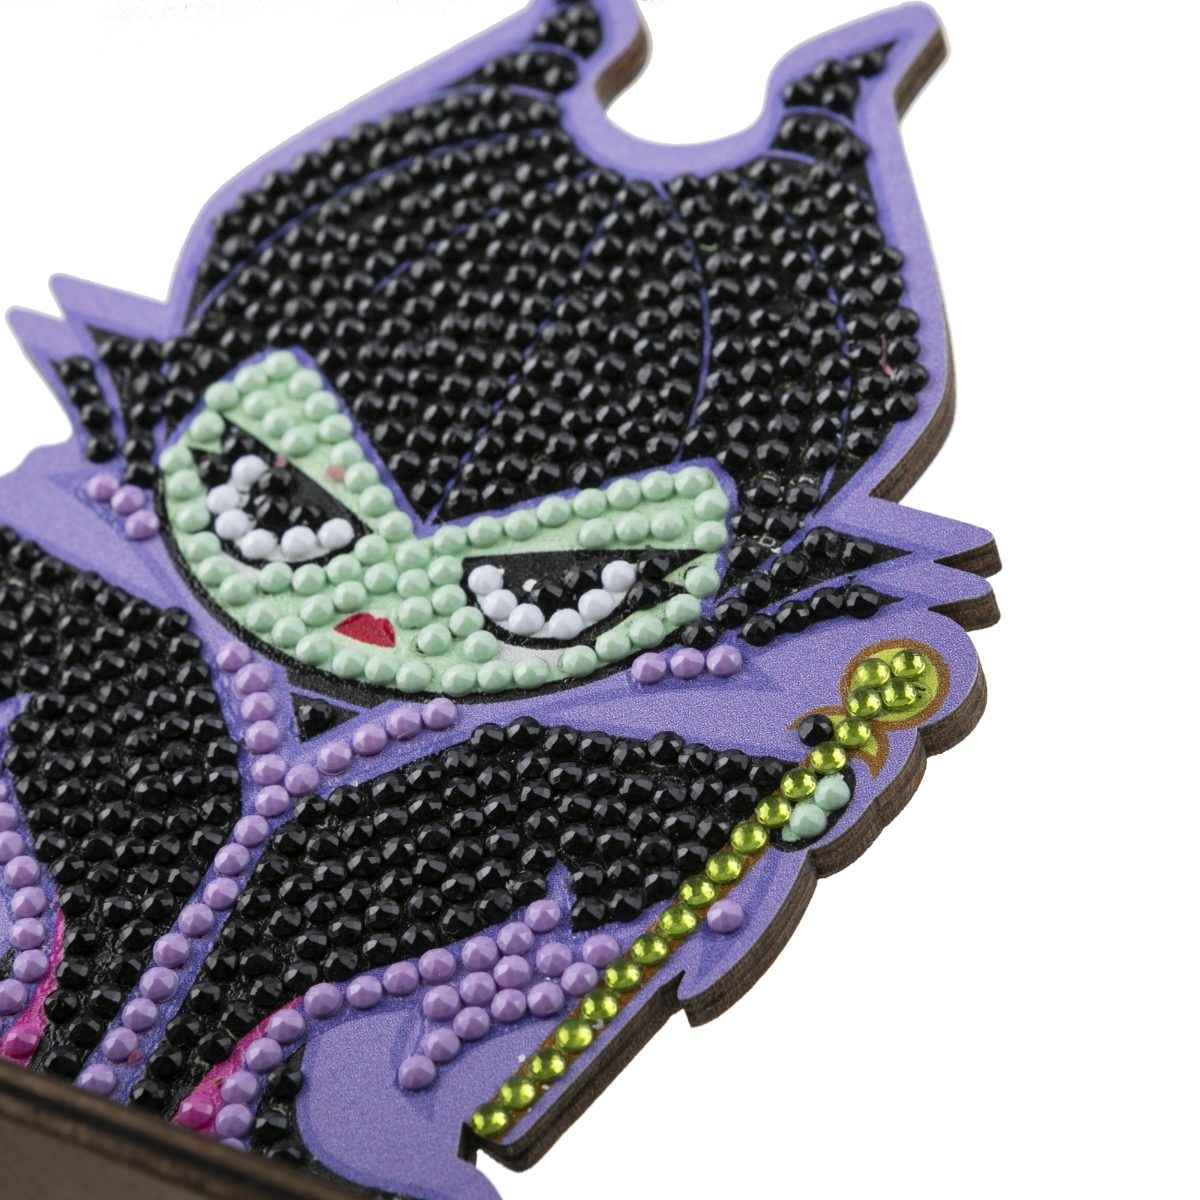 CAFGR-DNY010 Maleficent Crystal Art Buddy Kit closeup